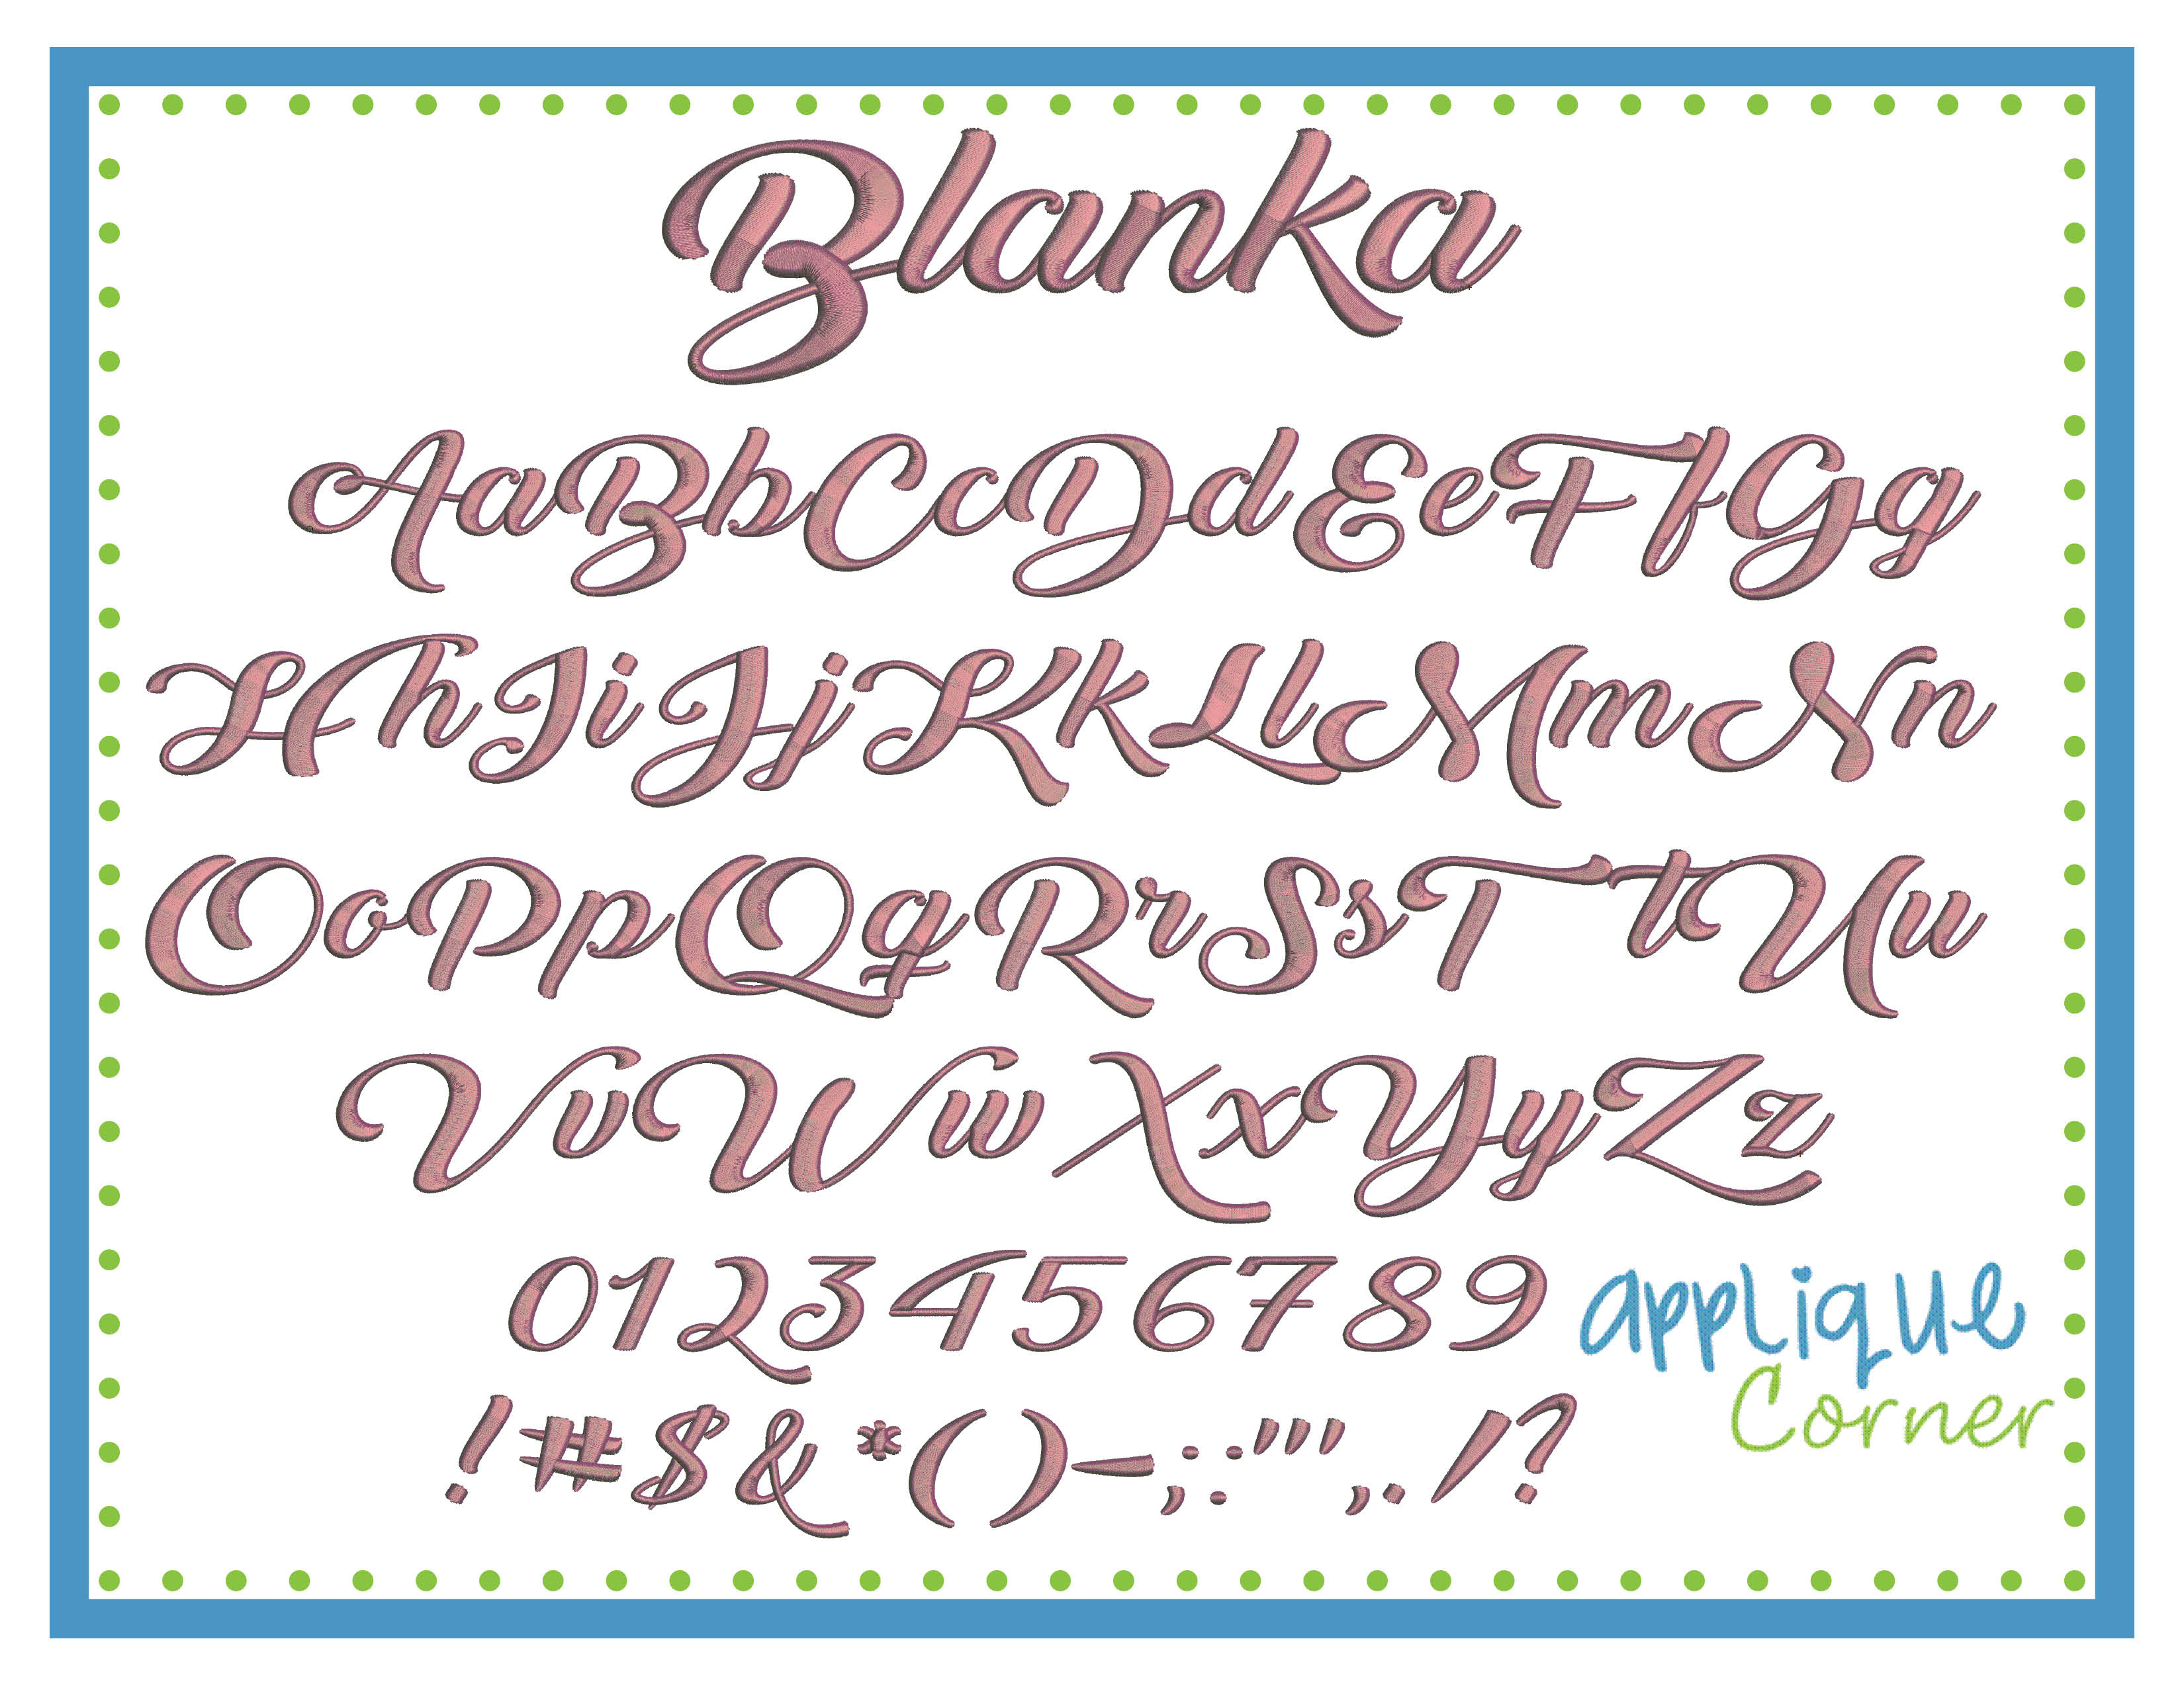 Blanka Embroidery Font